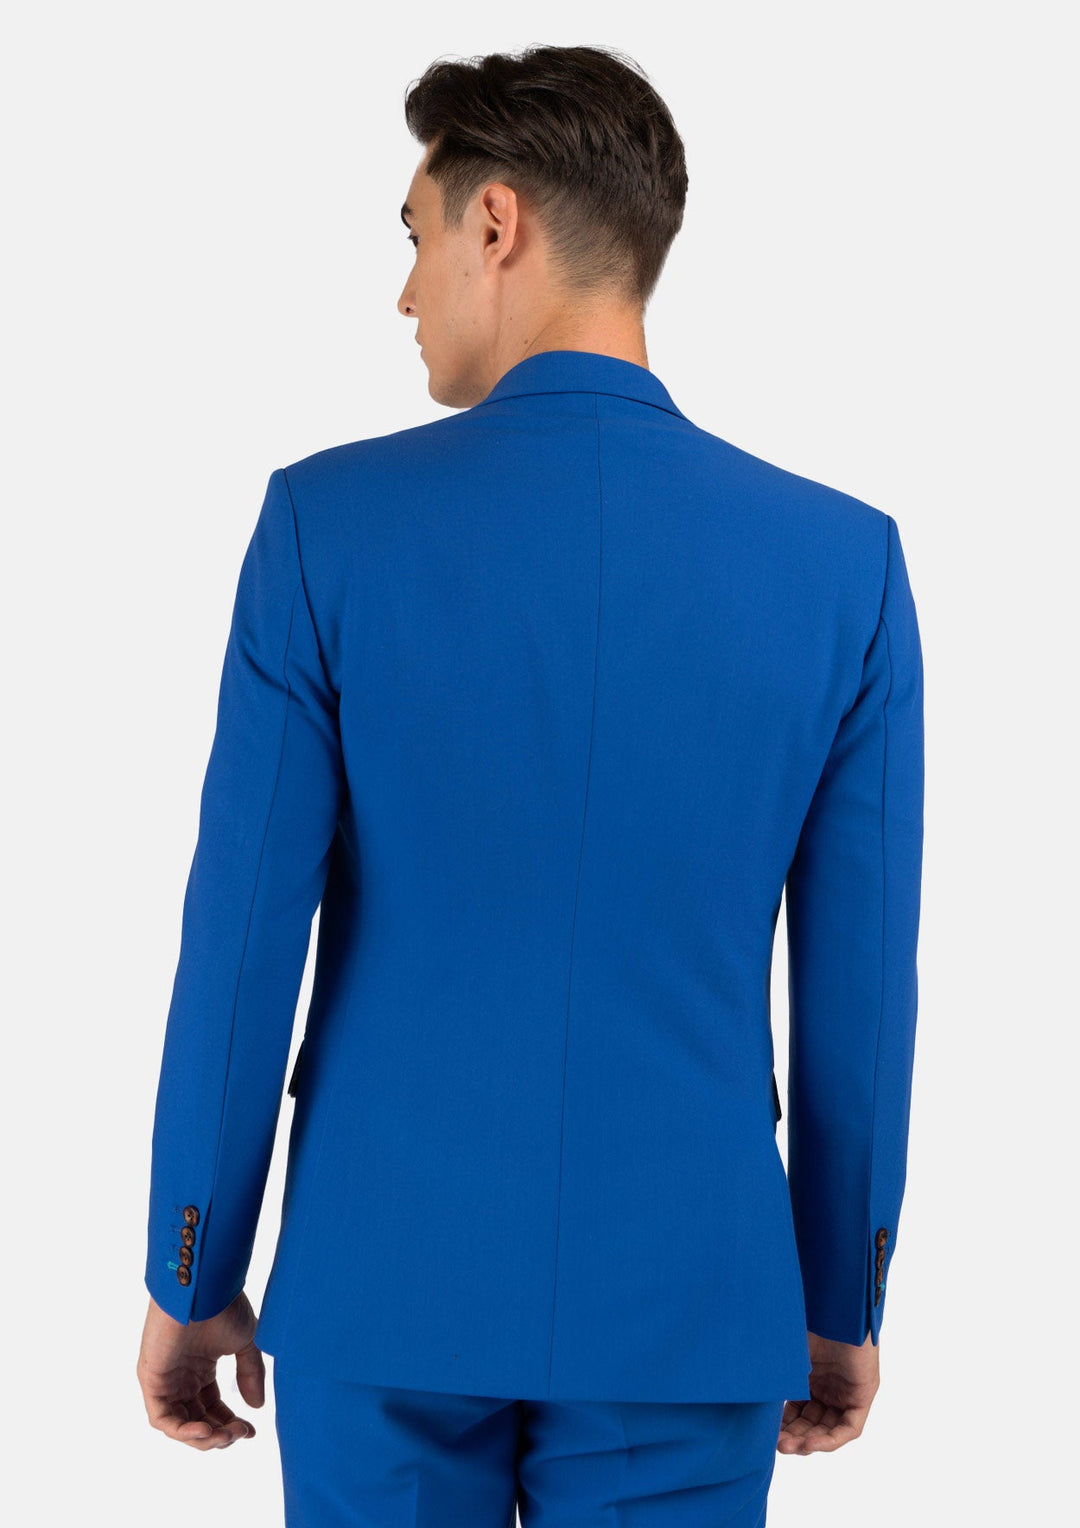 Astor Royal Blue Stretch Jacket - SARTORO